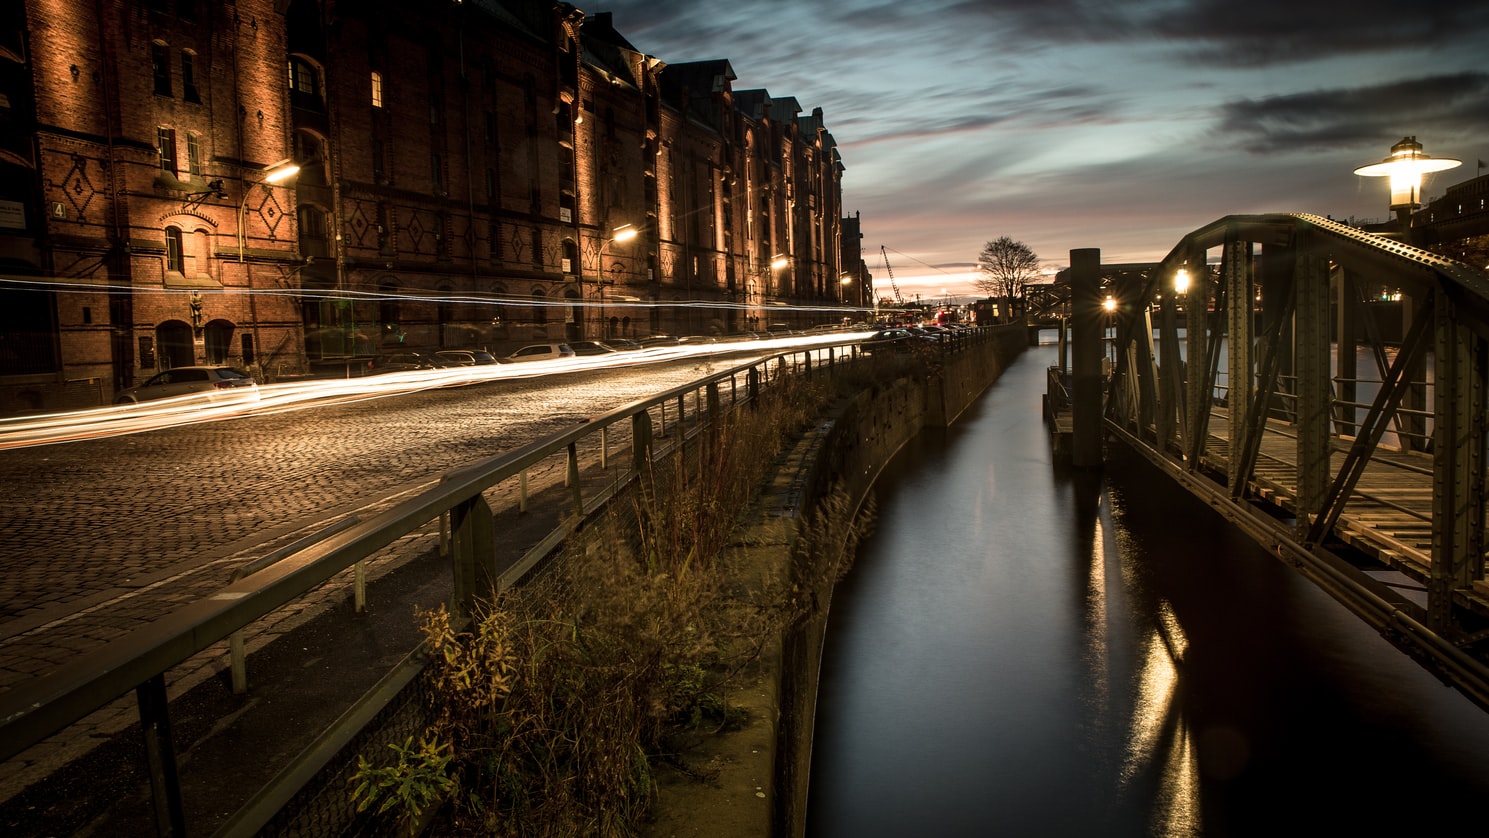 The warehouse district of Speicherstadt, Hamburg, Germany by night.